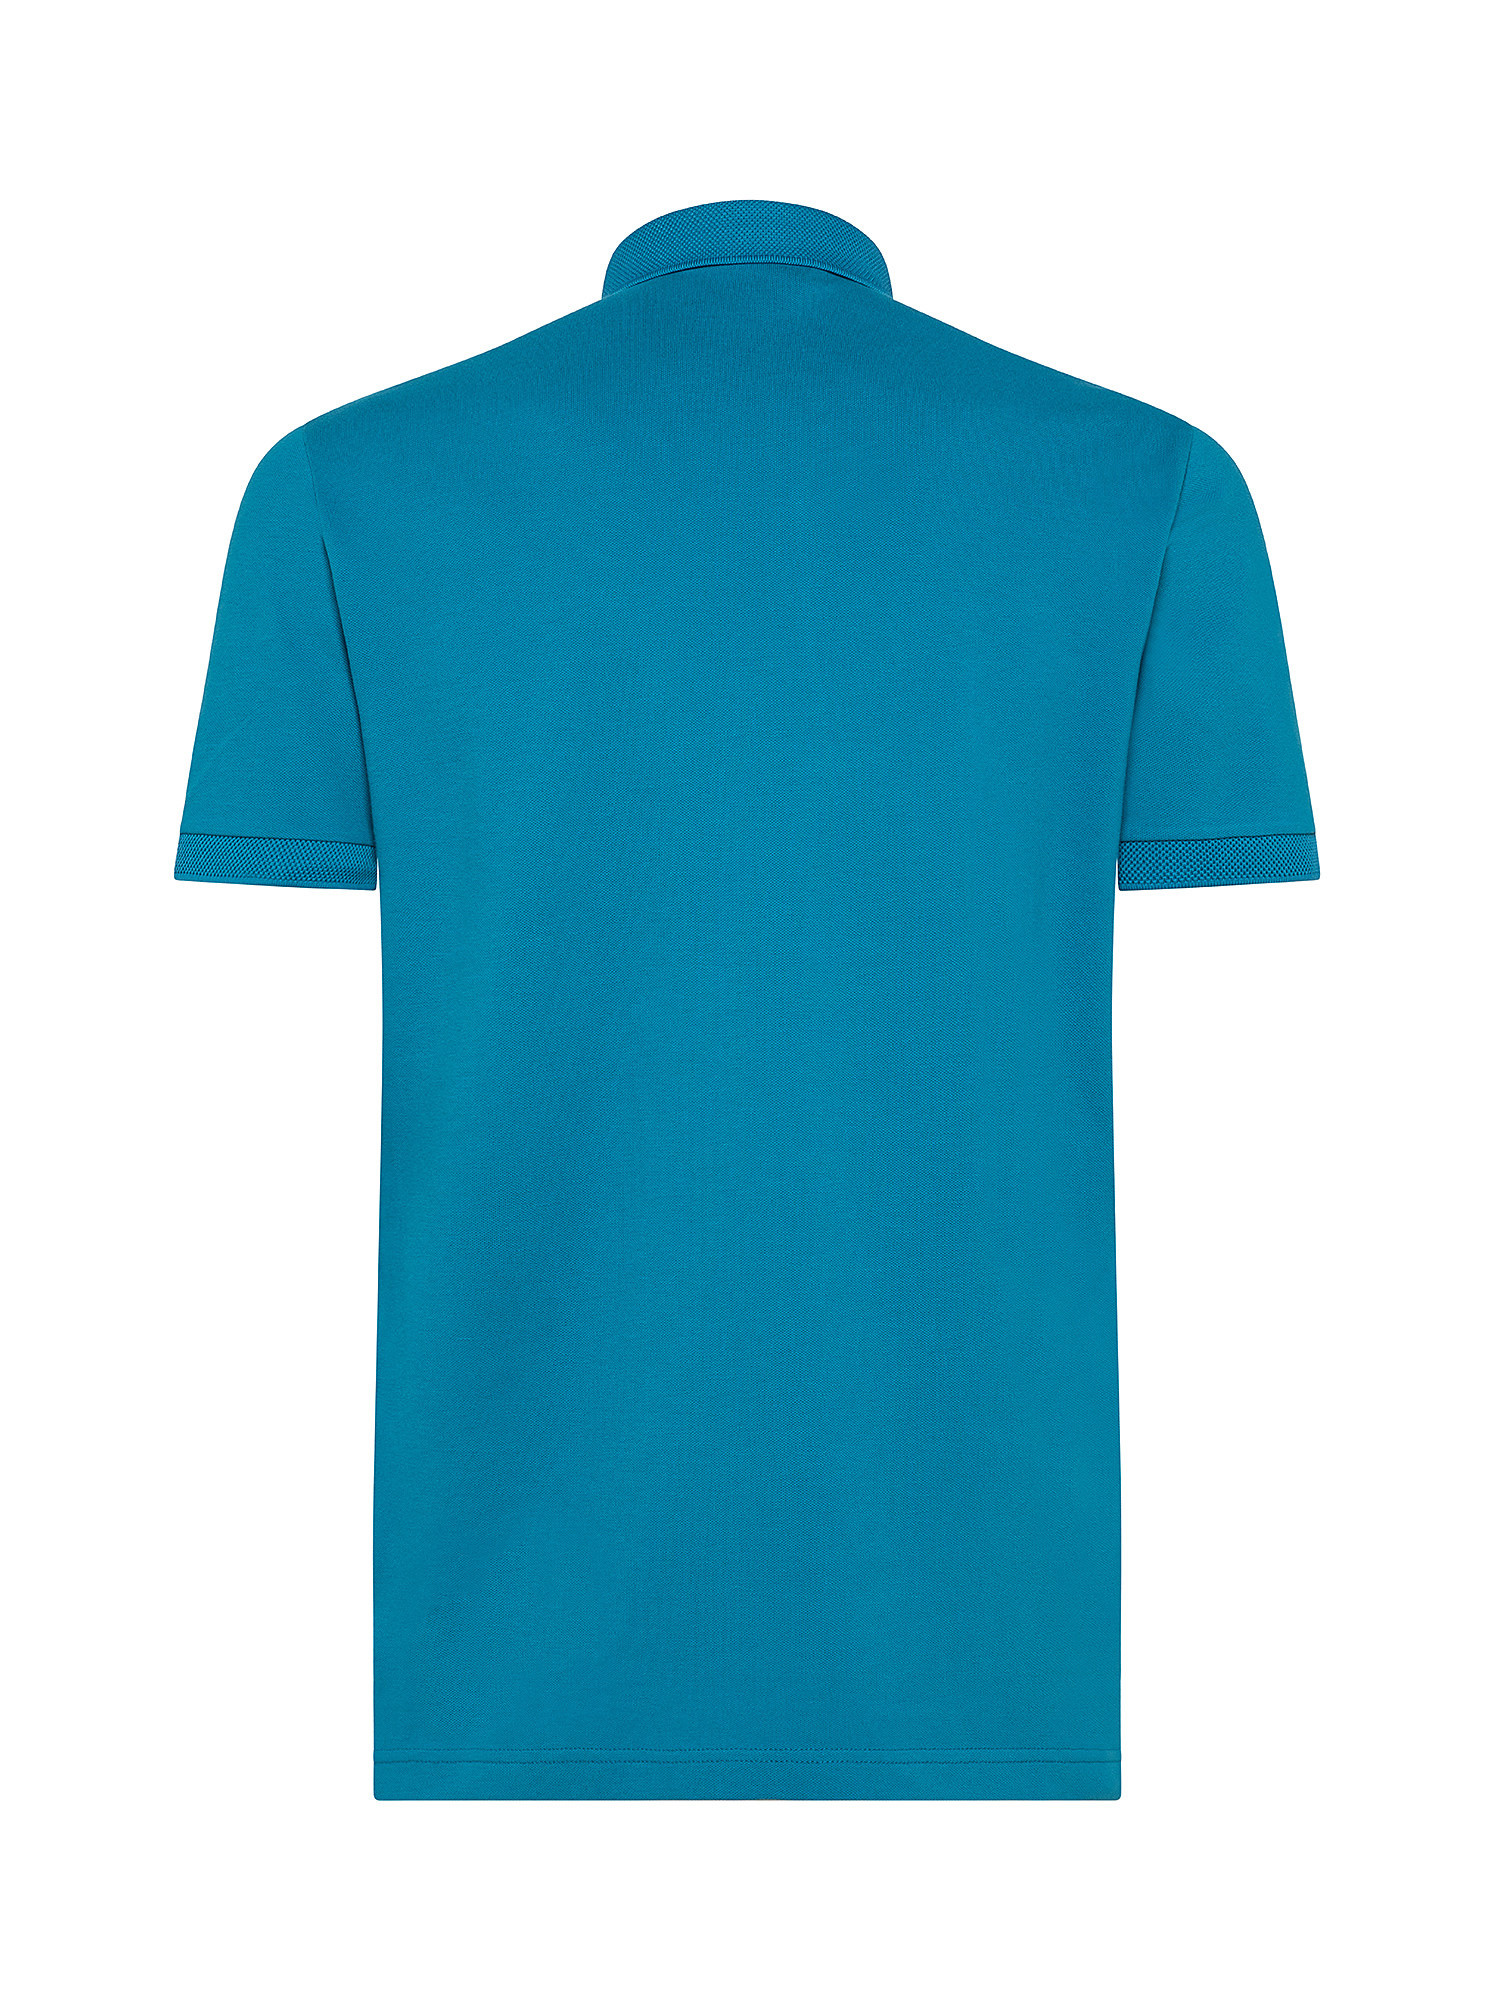 Polo shirt, Turquoise, large image number 1